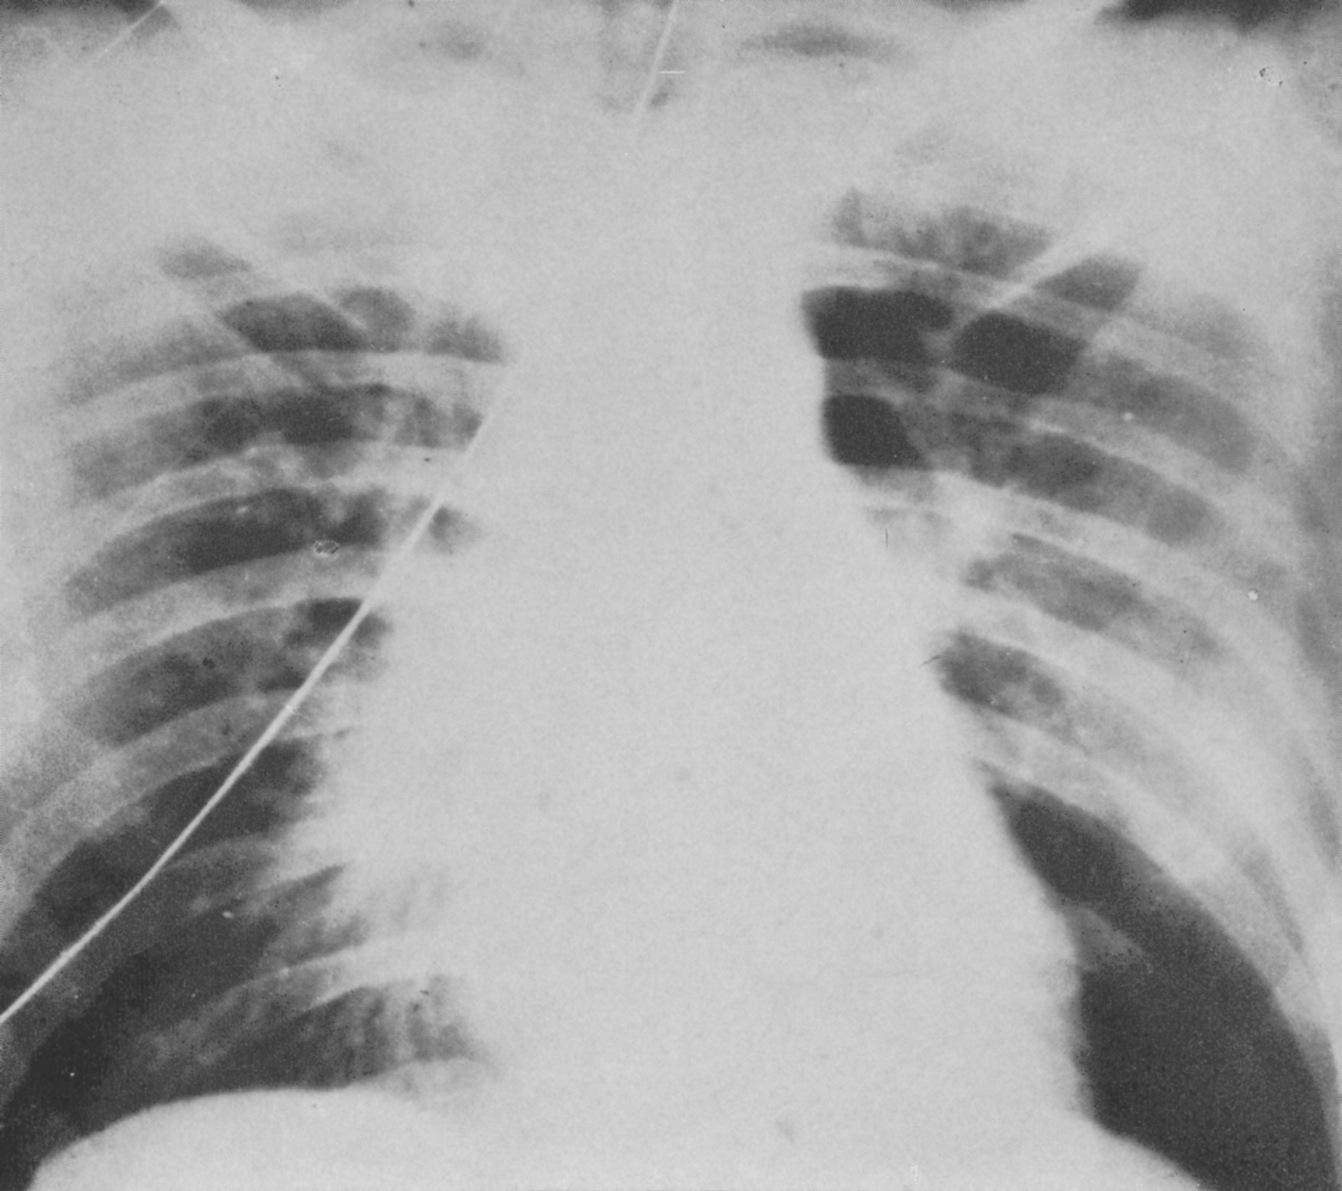 6Type 4, the so-called “critical pneumonia